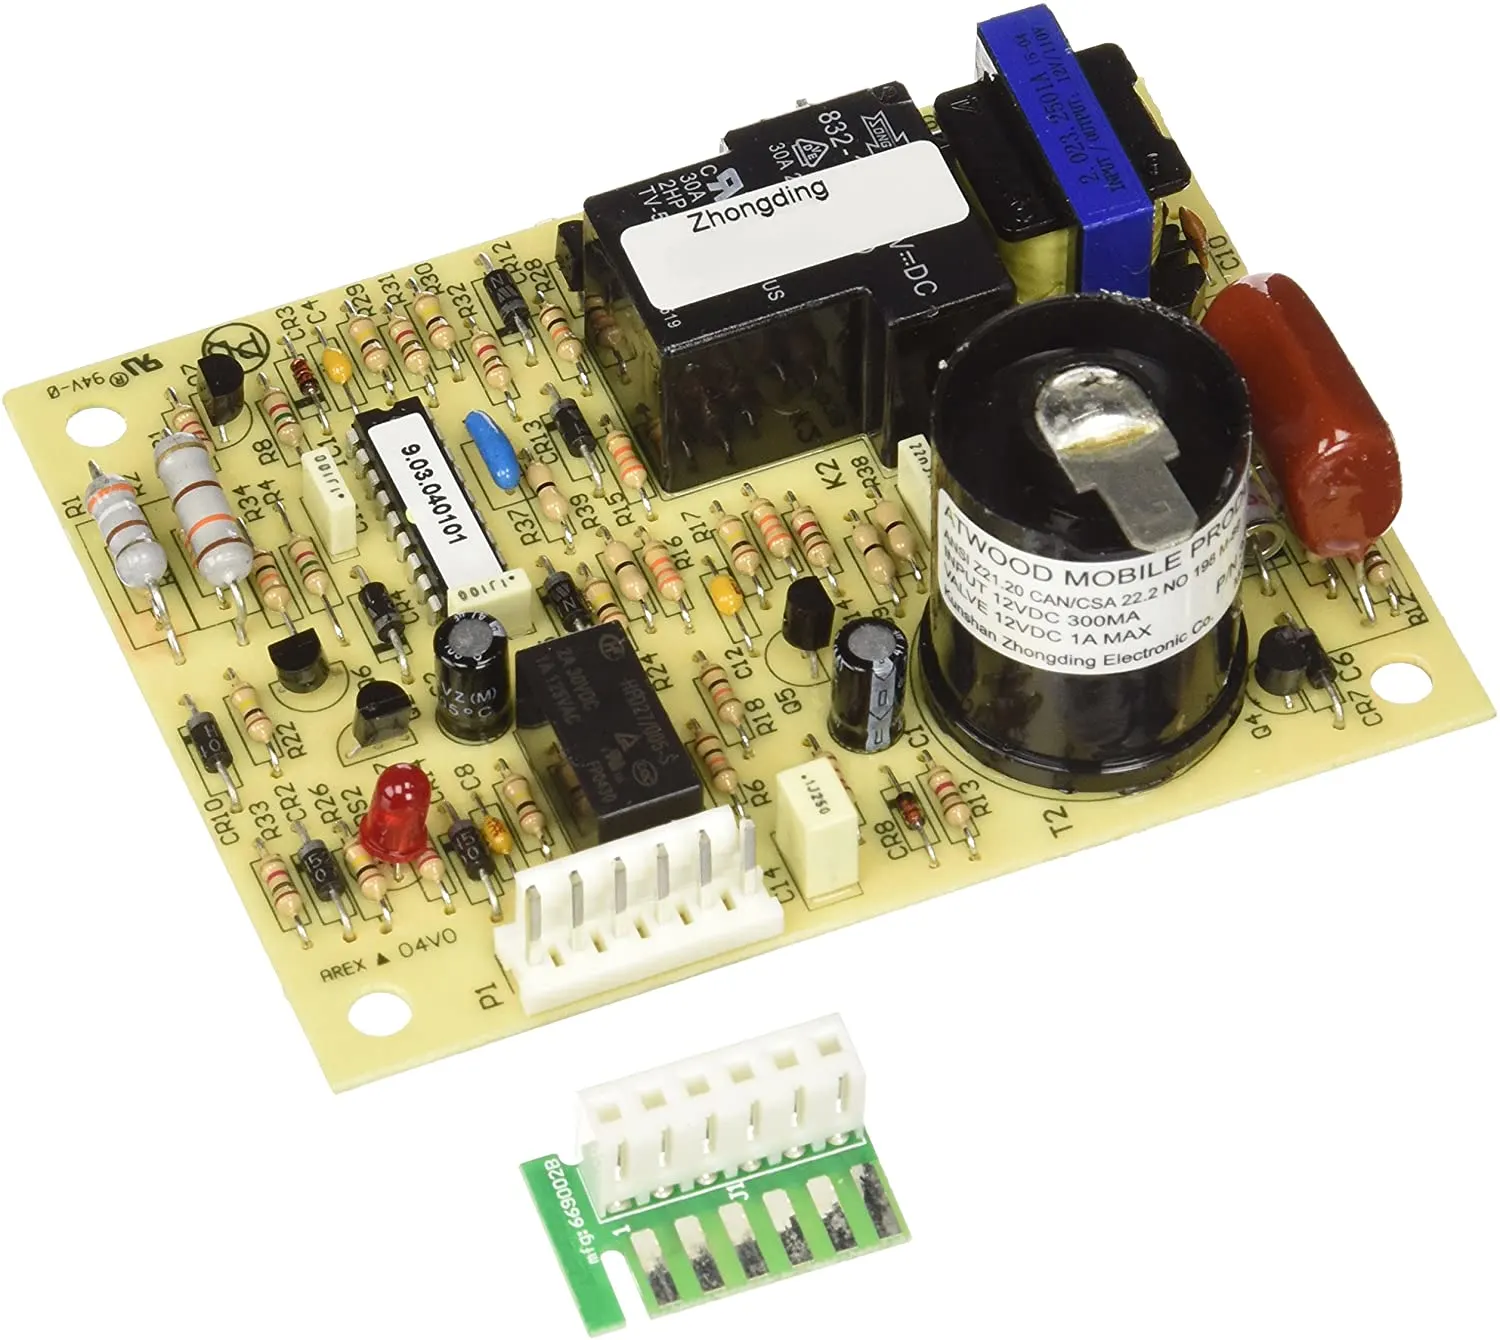 Photo of an Atwood RV furnace circuit board